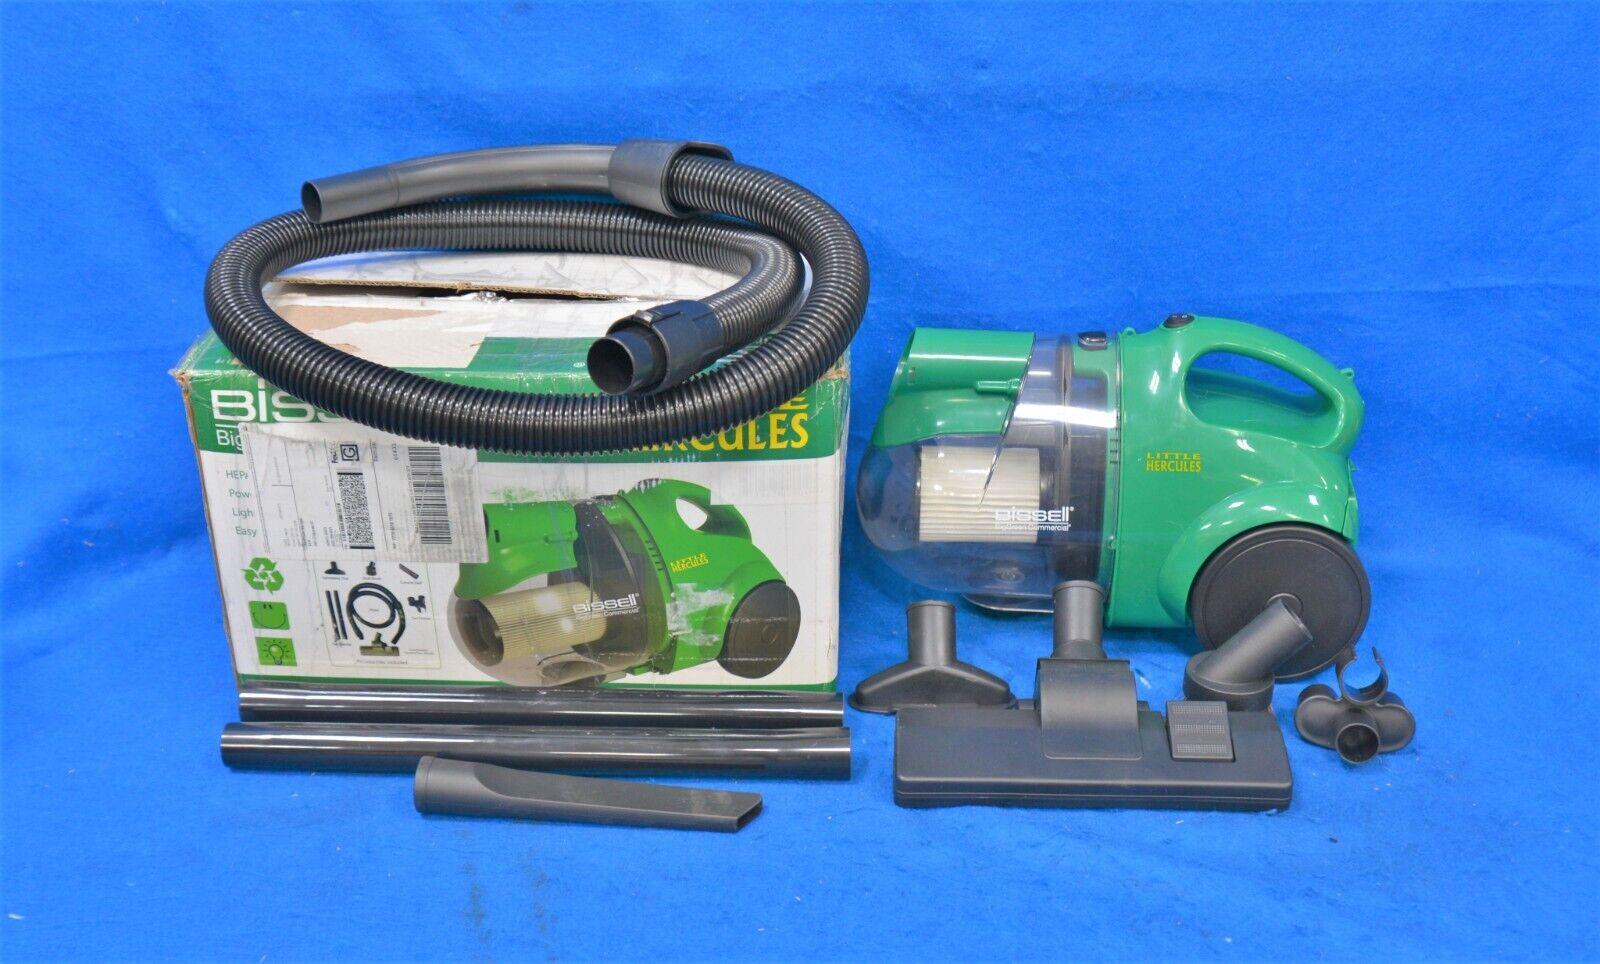 Bissell Bgc2000 Little Hercules 1/2 Gallon Compact Vacuum